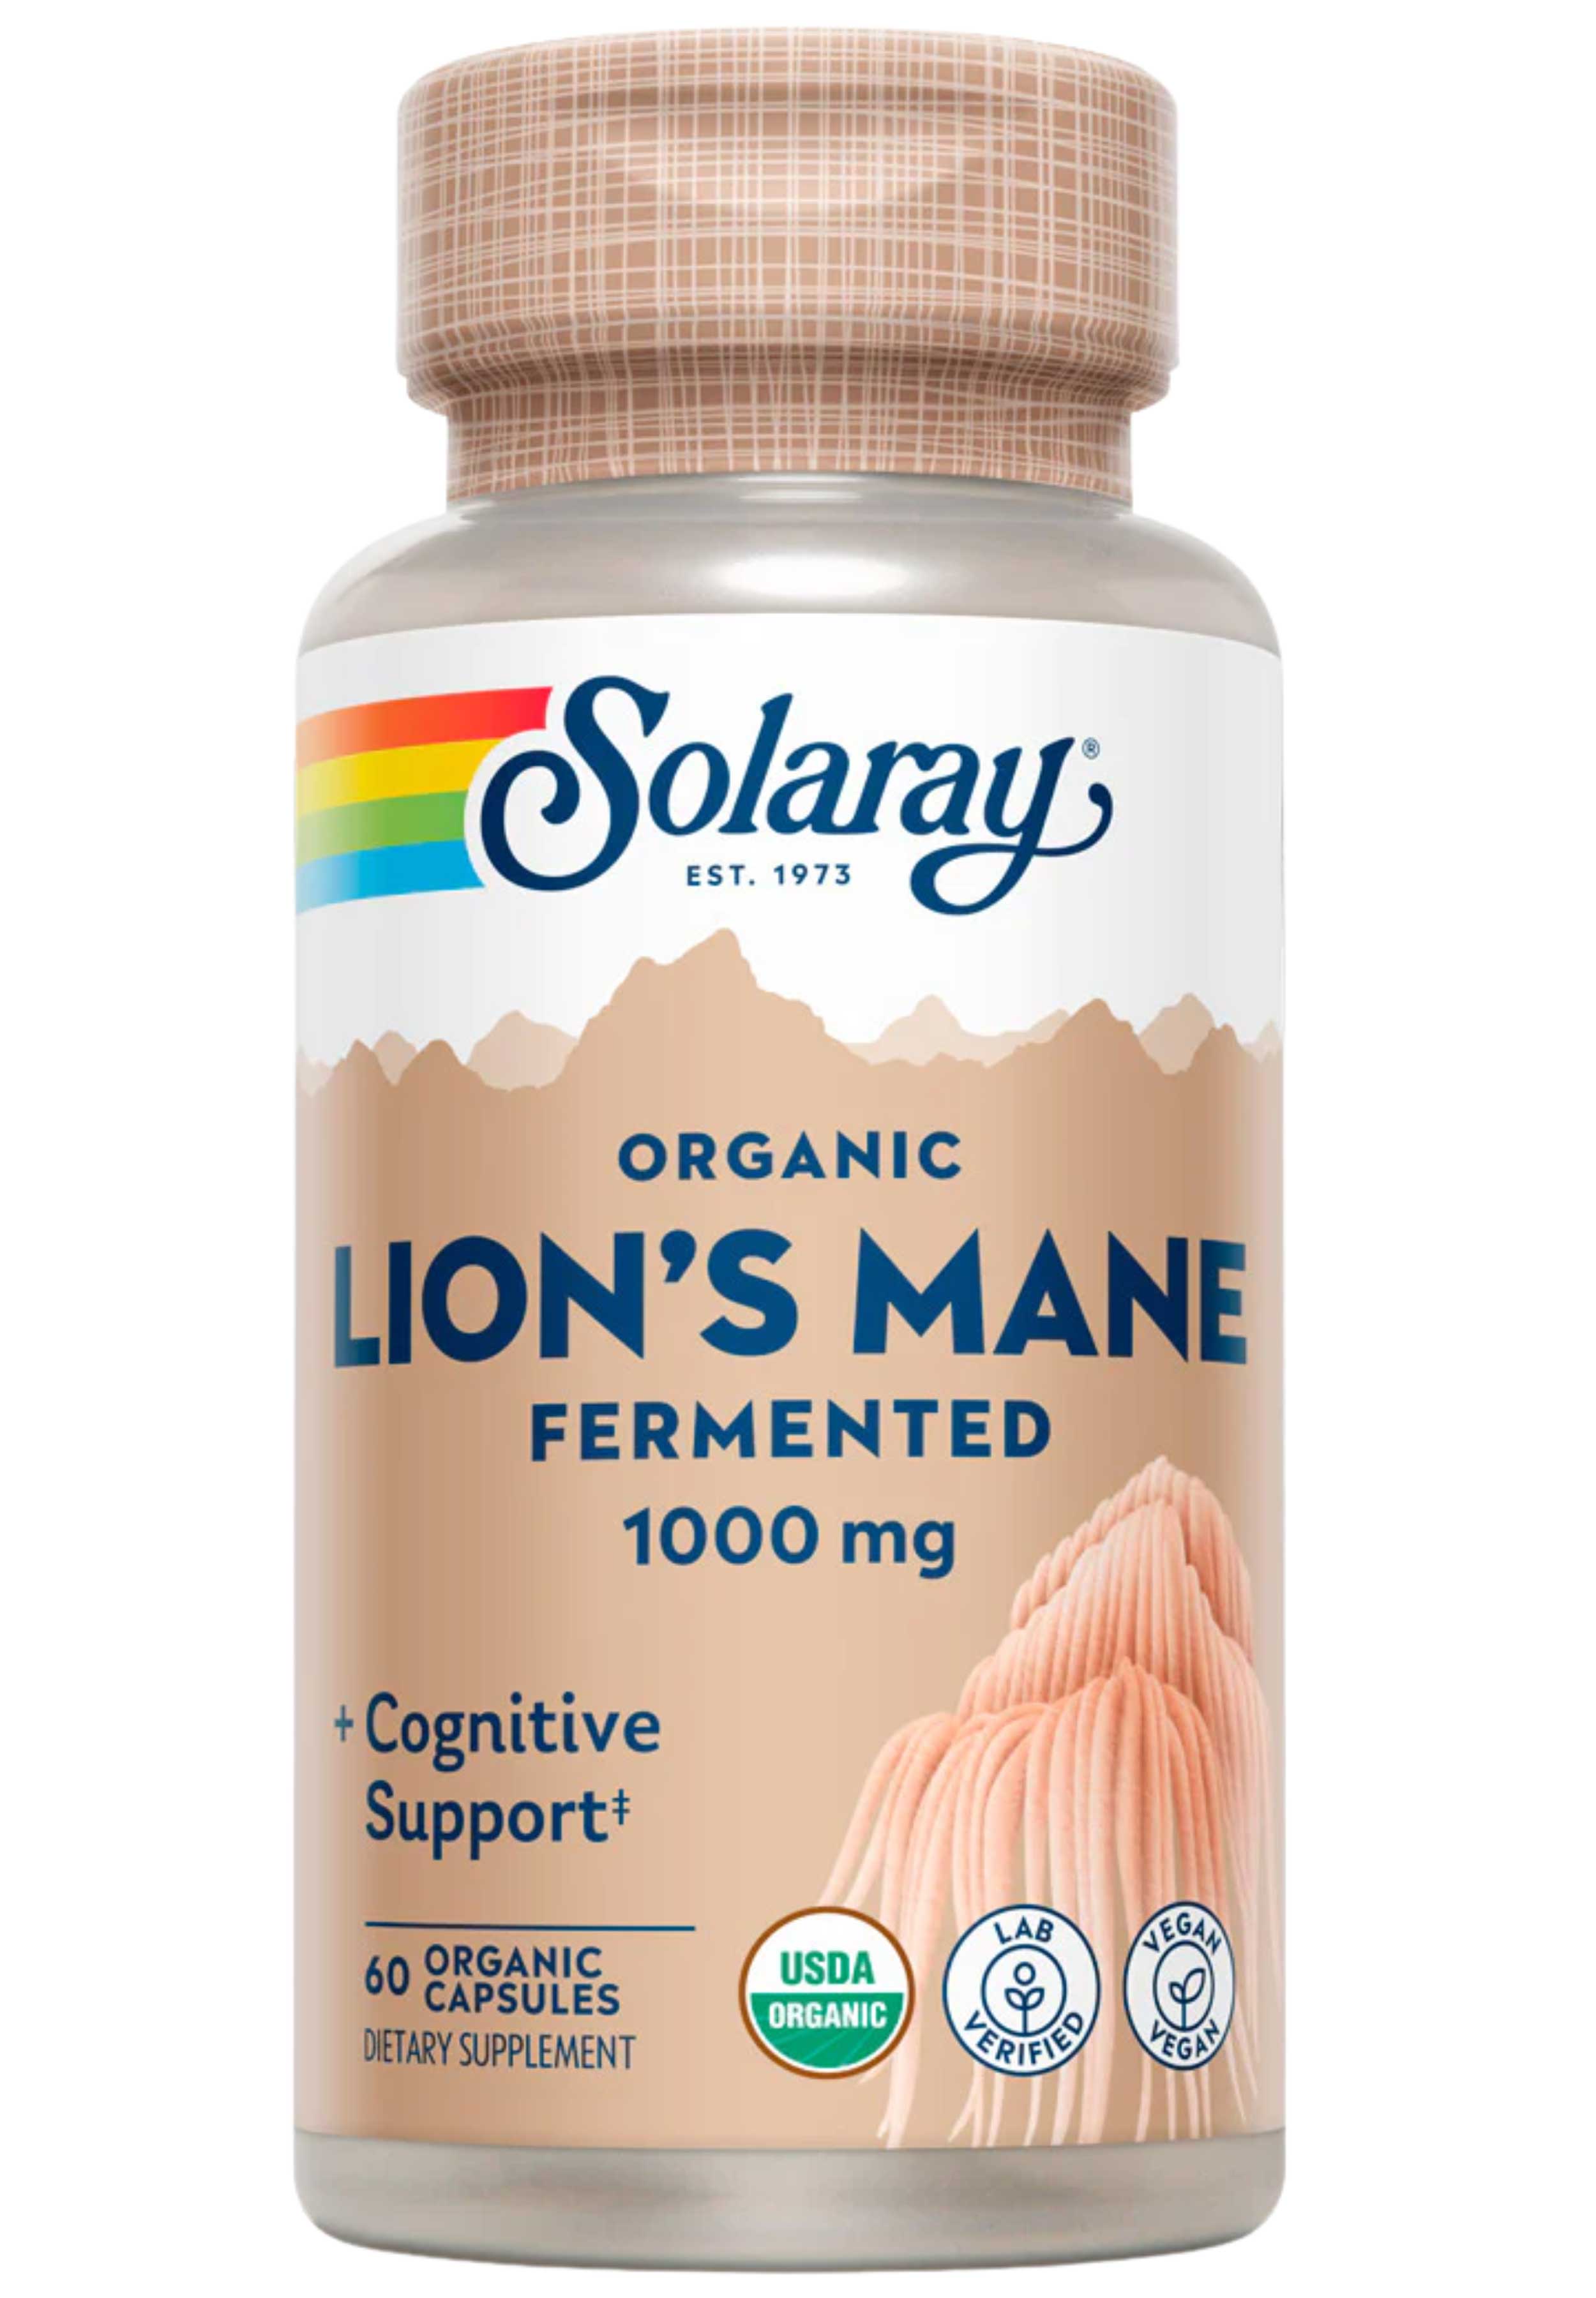 Solaray Fermented Lion's Mane 1000 mg